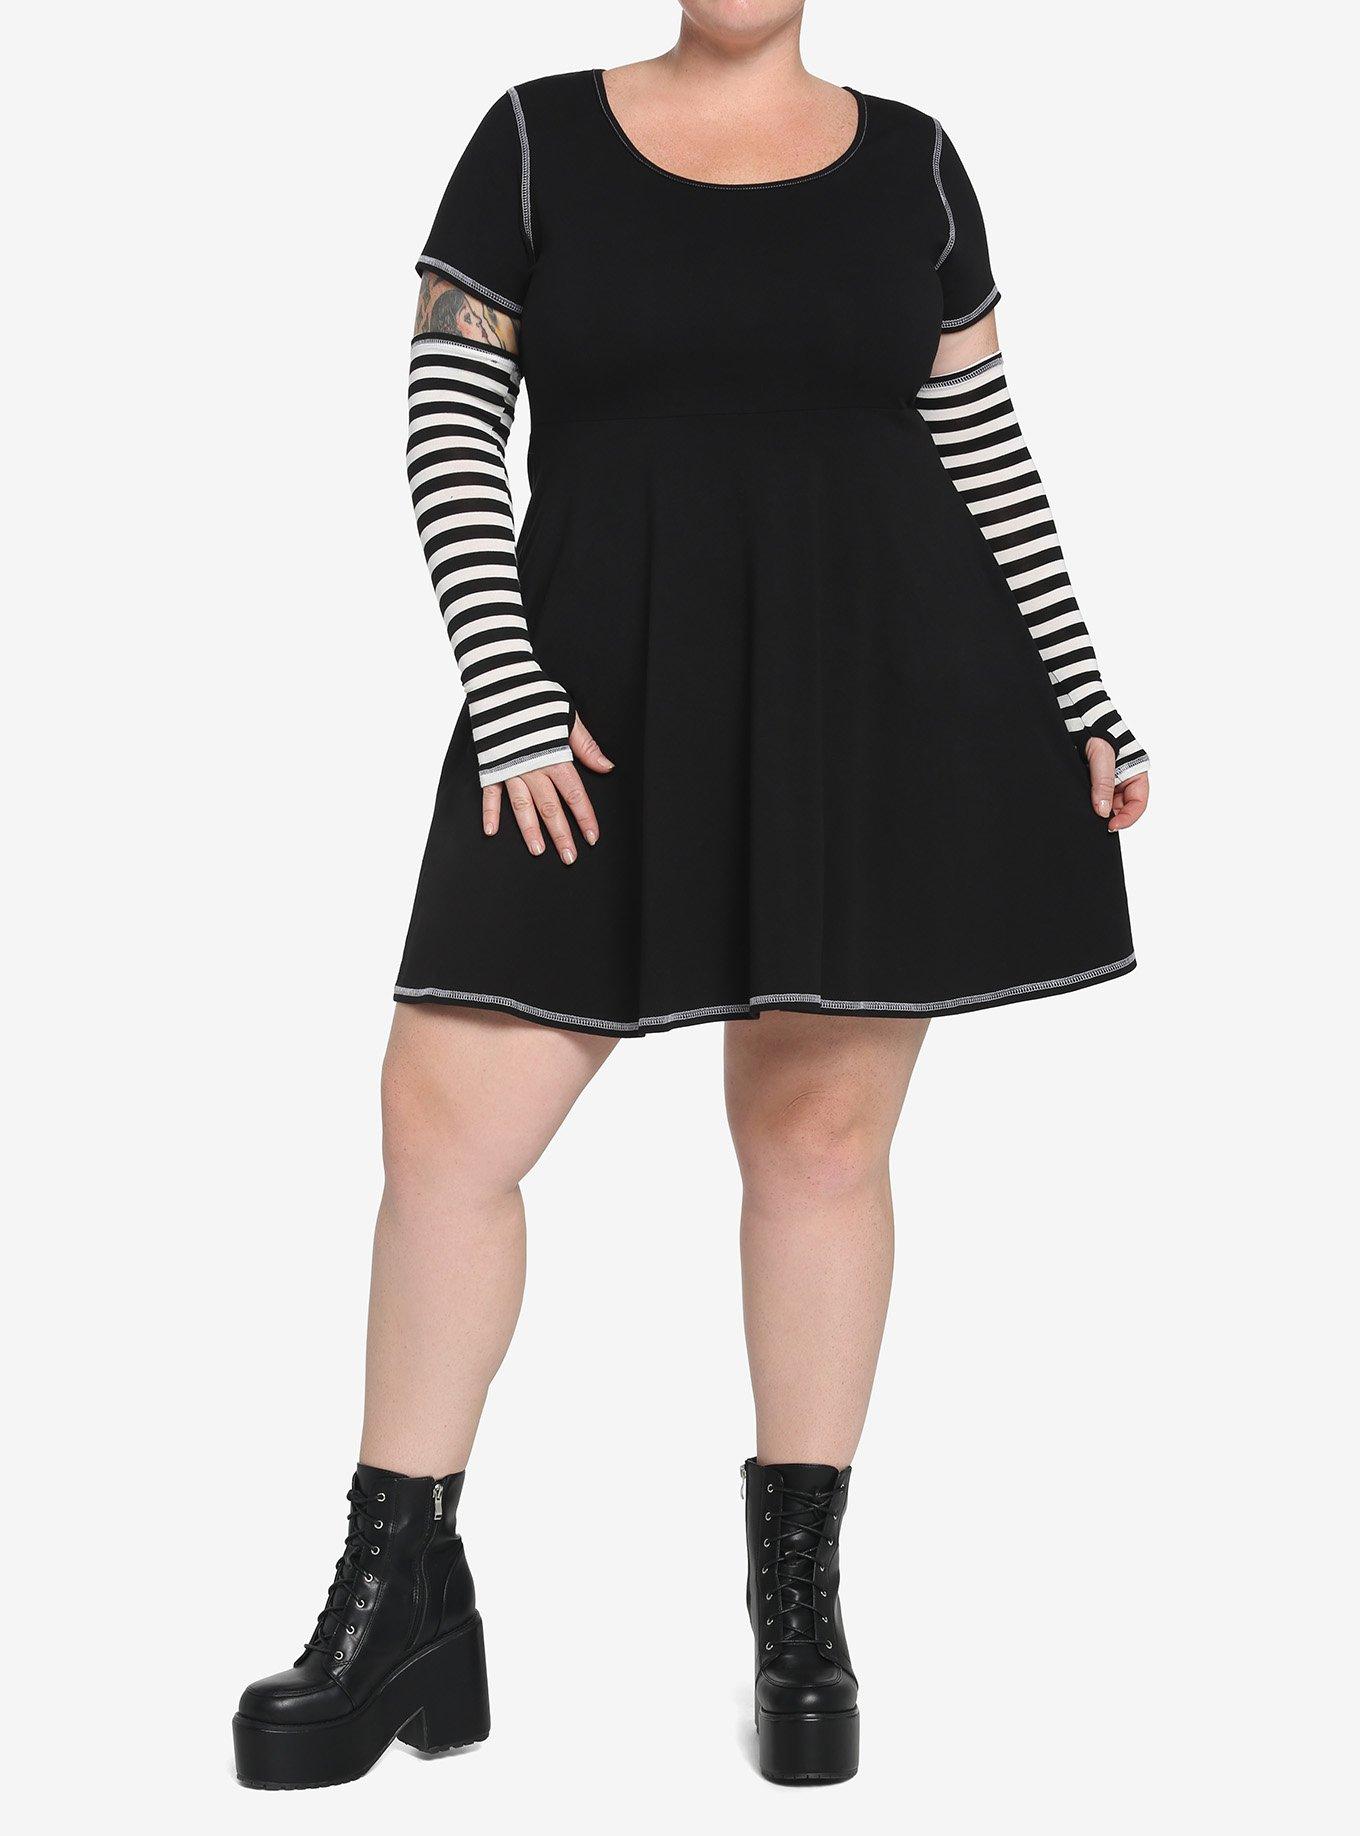 Black & White Contrast Stitch Skater Dress Plus Size With Arm Warmers, MULTI, alternate